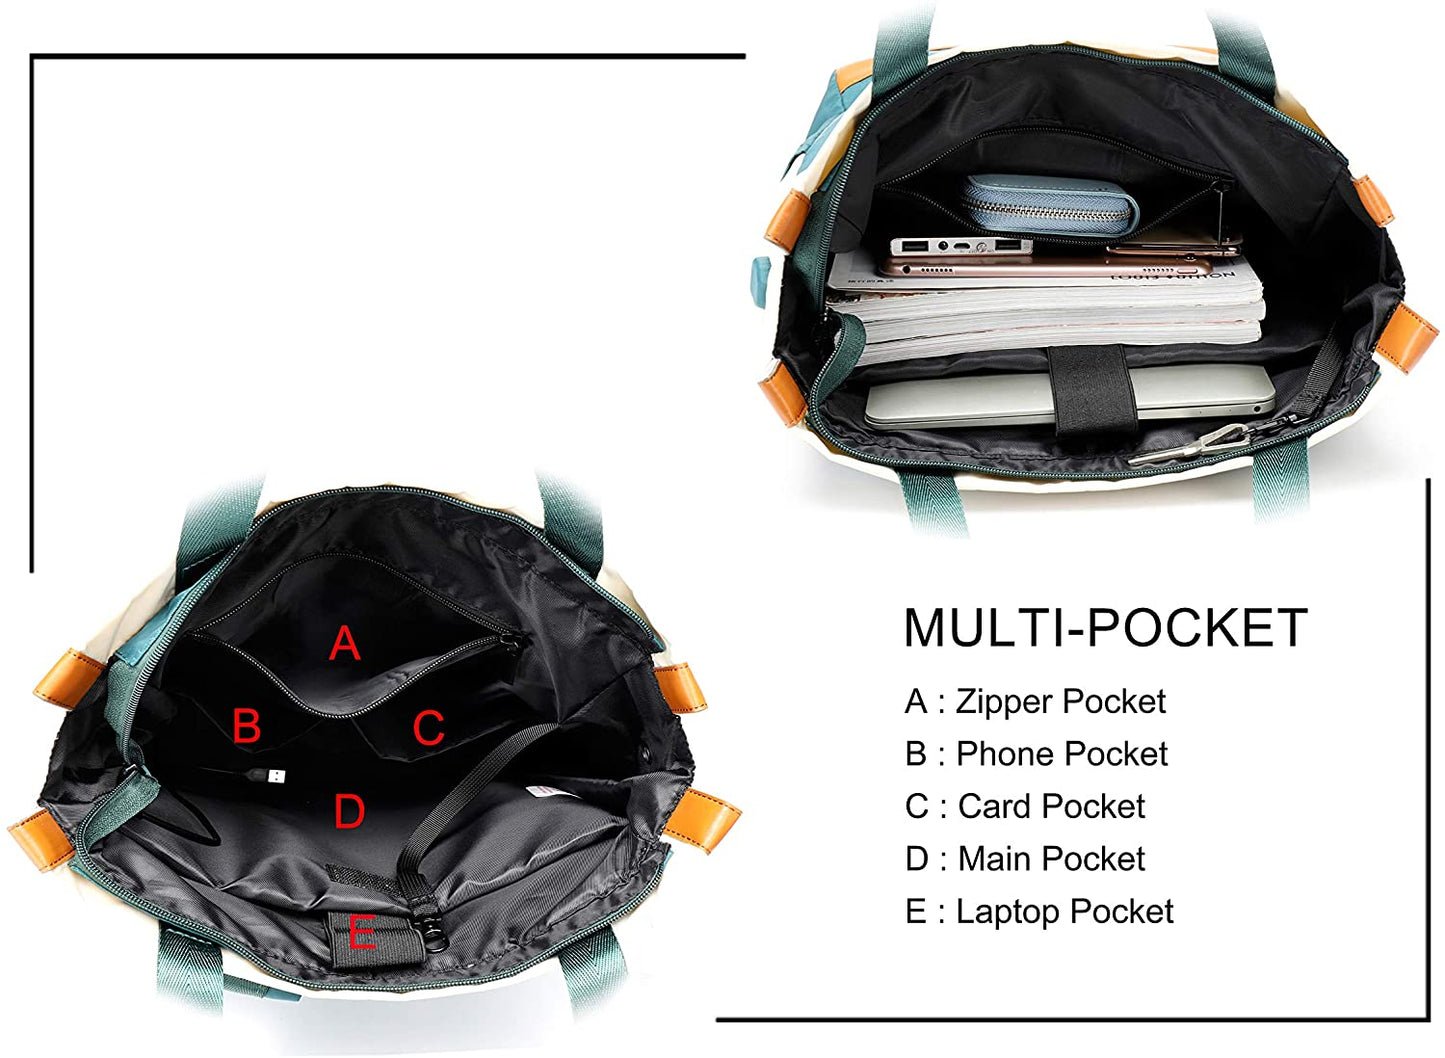 Travel Business Bookbag Tote Daypack Convertible Backpack